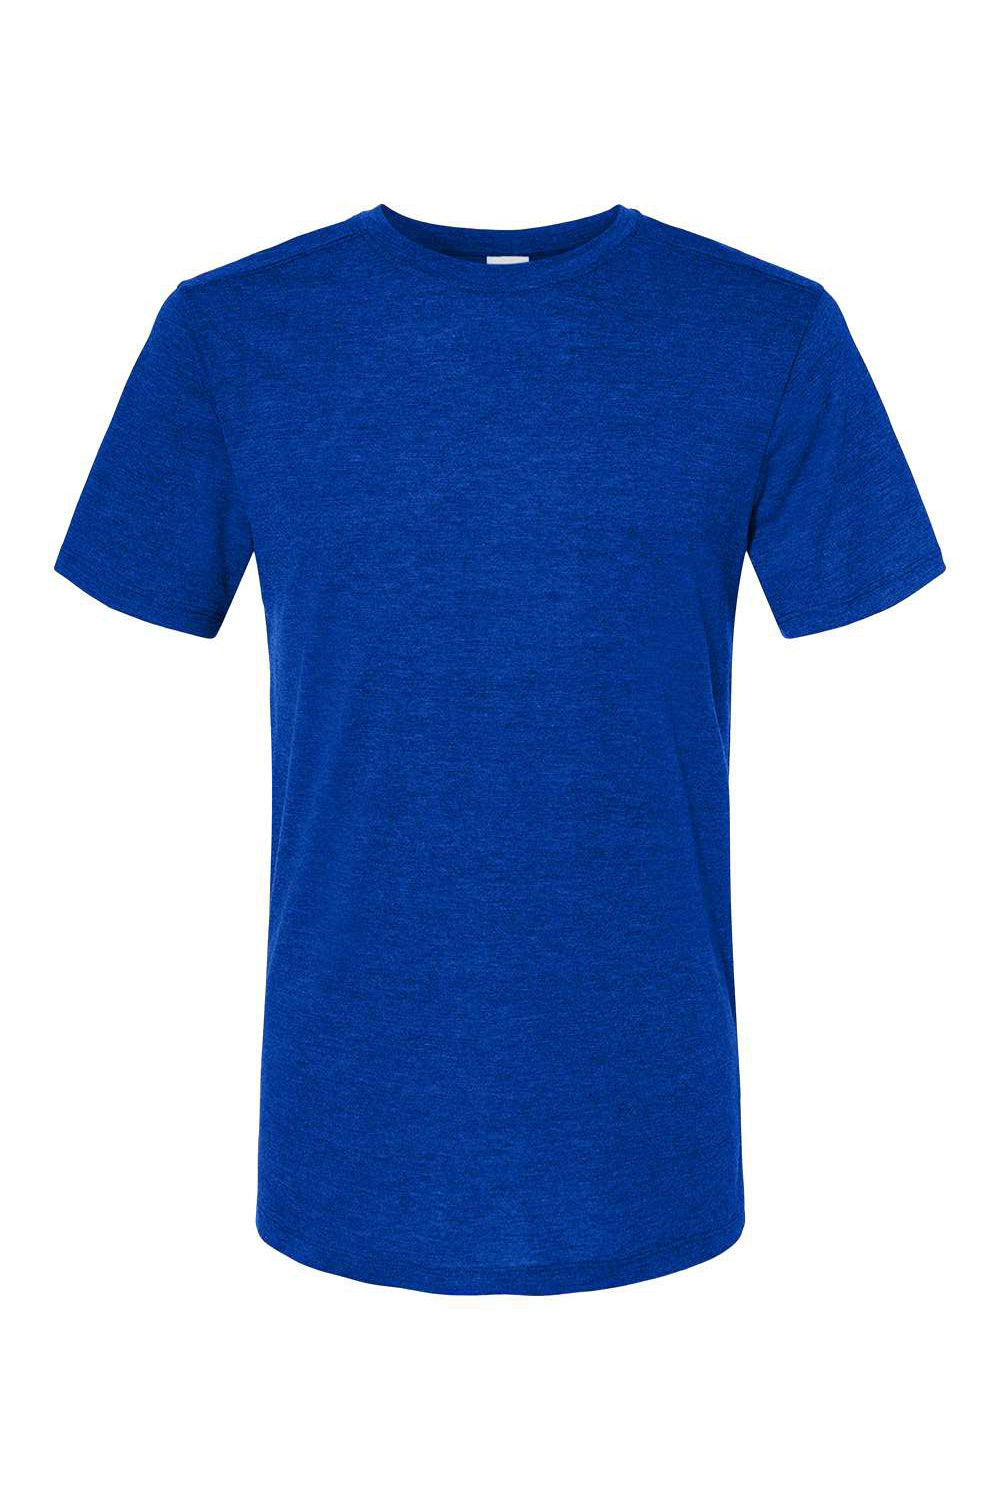 Augusta Sportswear 3065 Mens Short Sleeve Crewneck T-Shirt Heather Royal Blue Flat Front